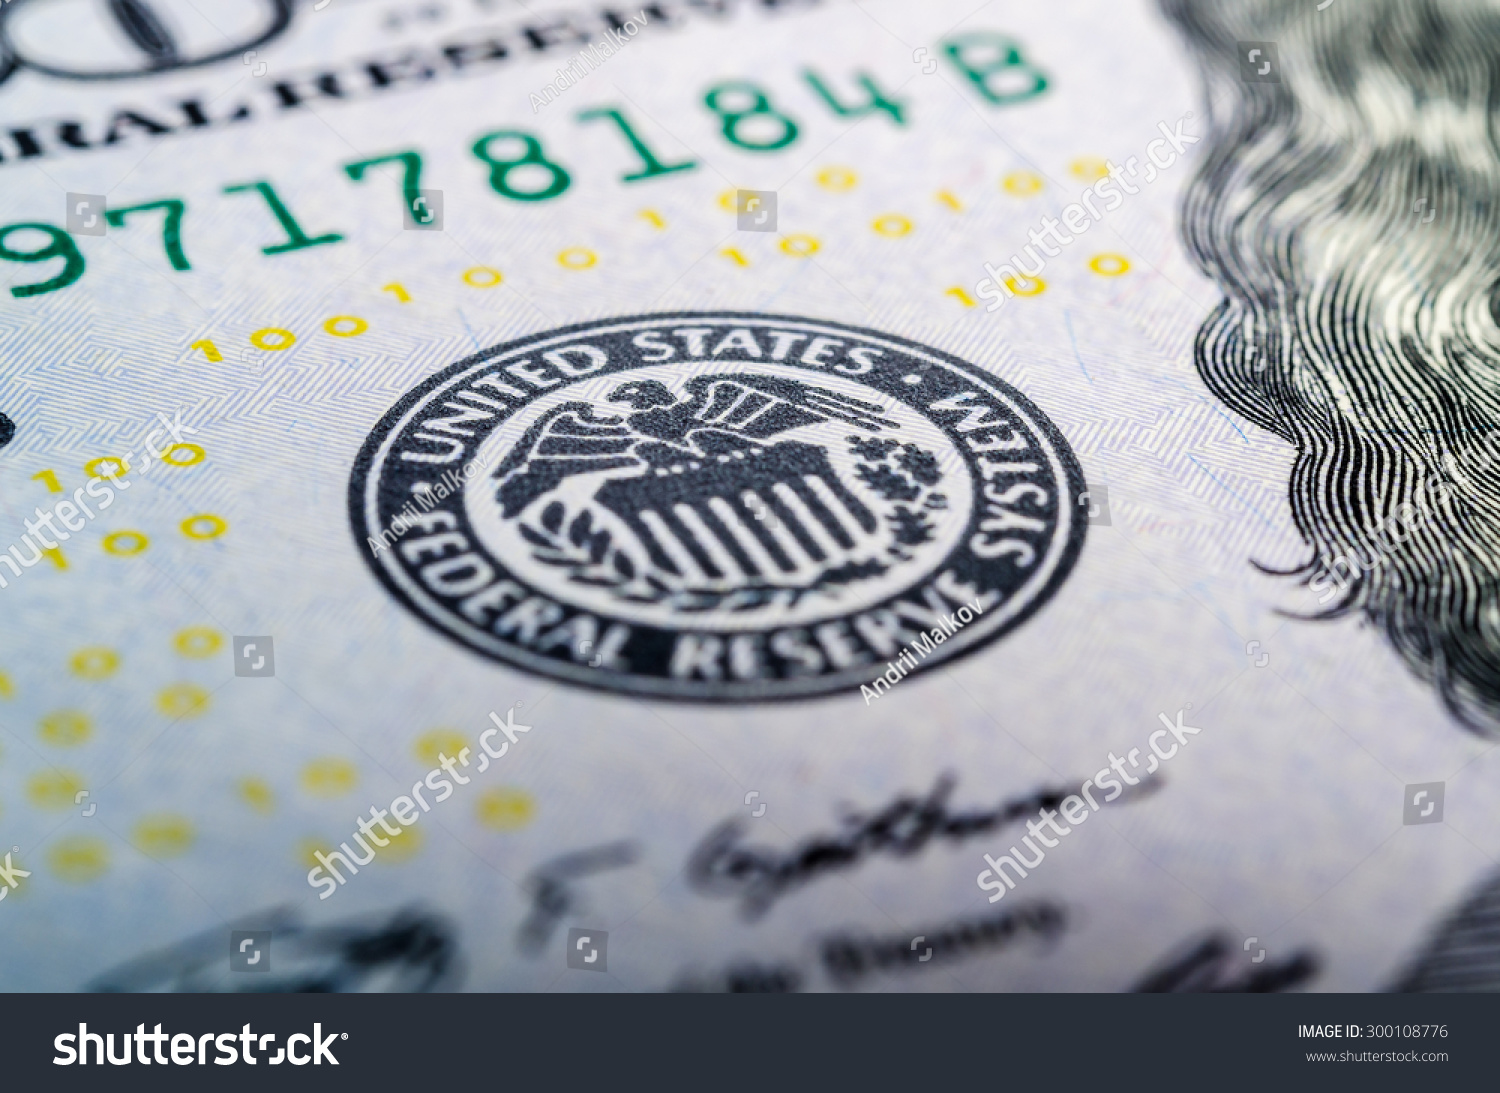 Federal reserve system symbol on hundred dollar bill closeup macro shot #300108776